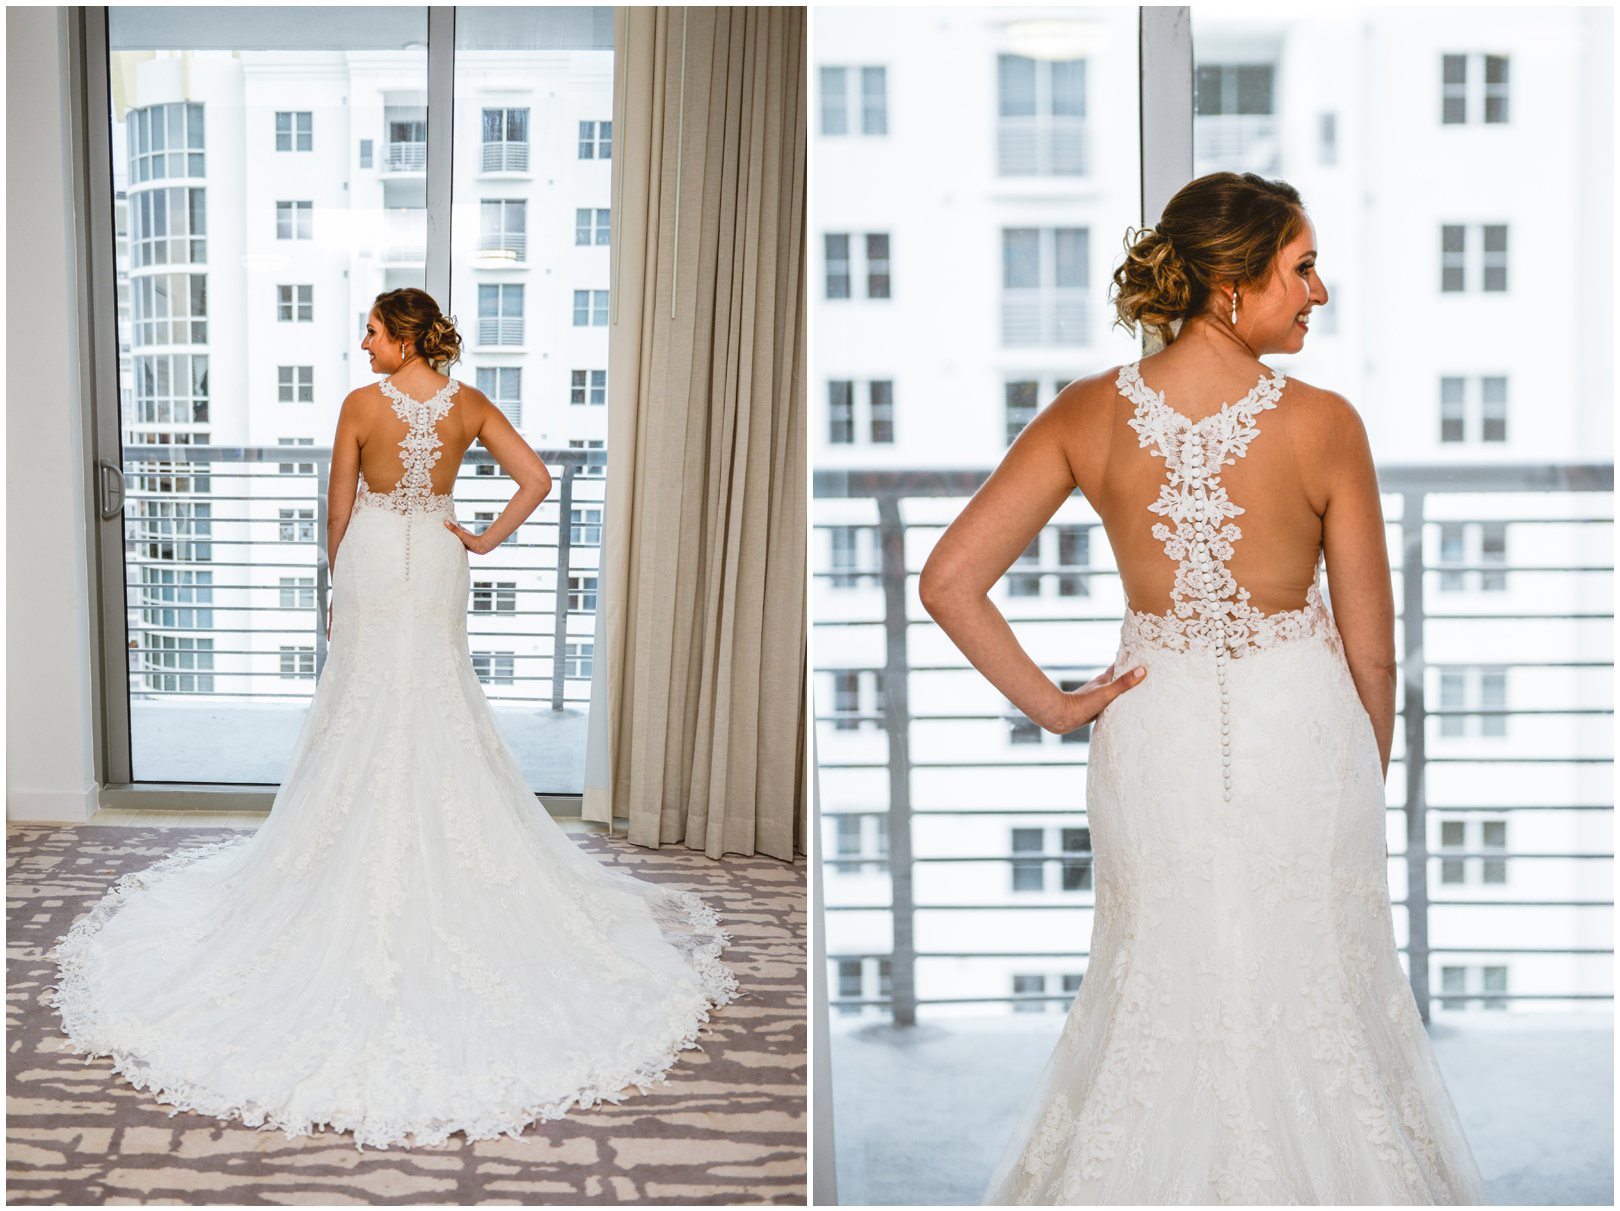 wedding dress, back, detail, lace, window, city